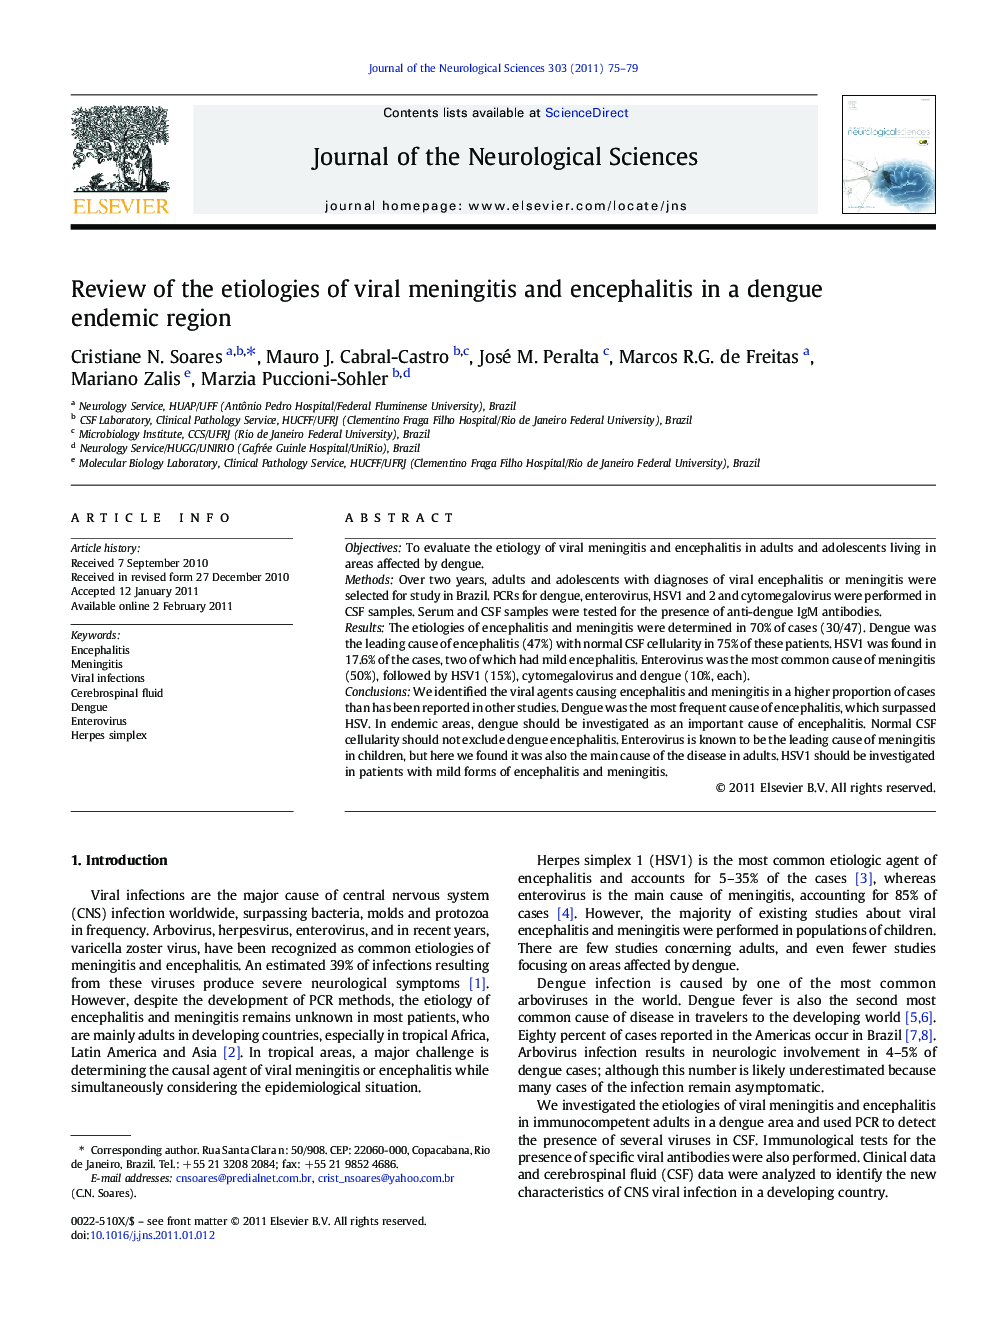 Review of the etiologies of viral meningitis and encephalitis in a dengue endemic region